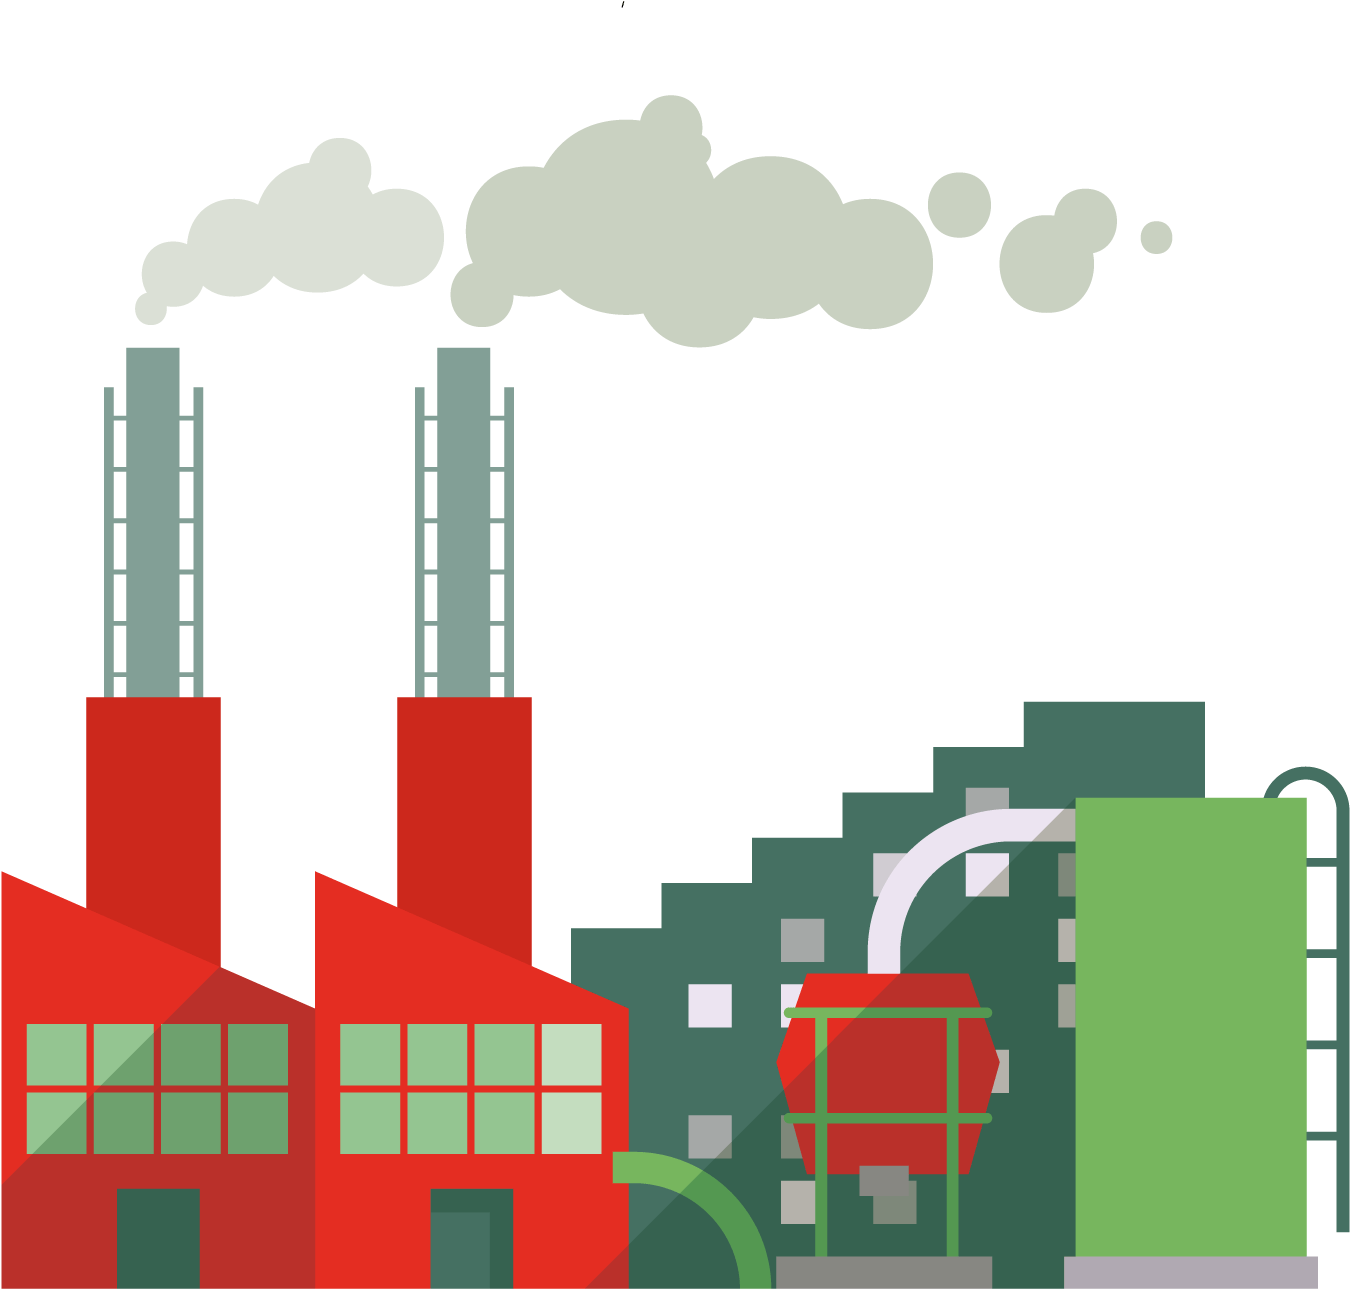 Chimney Power Station Icon - Power Plant Cartoon (1501x1501)